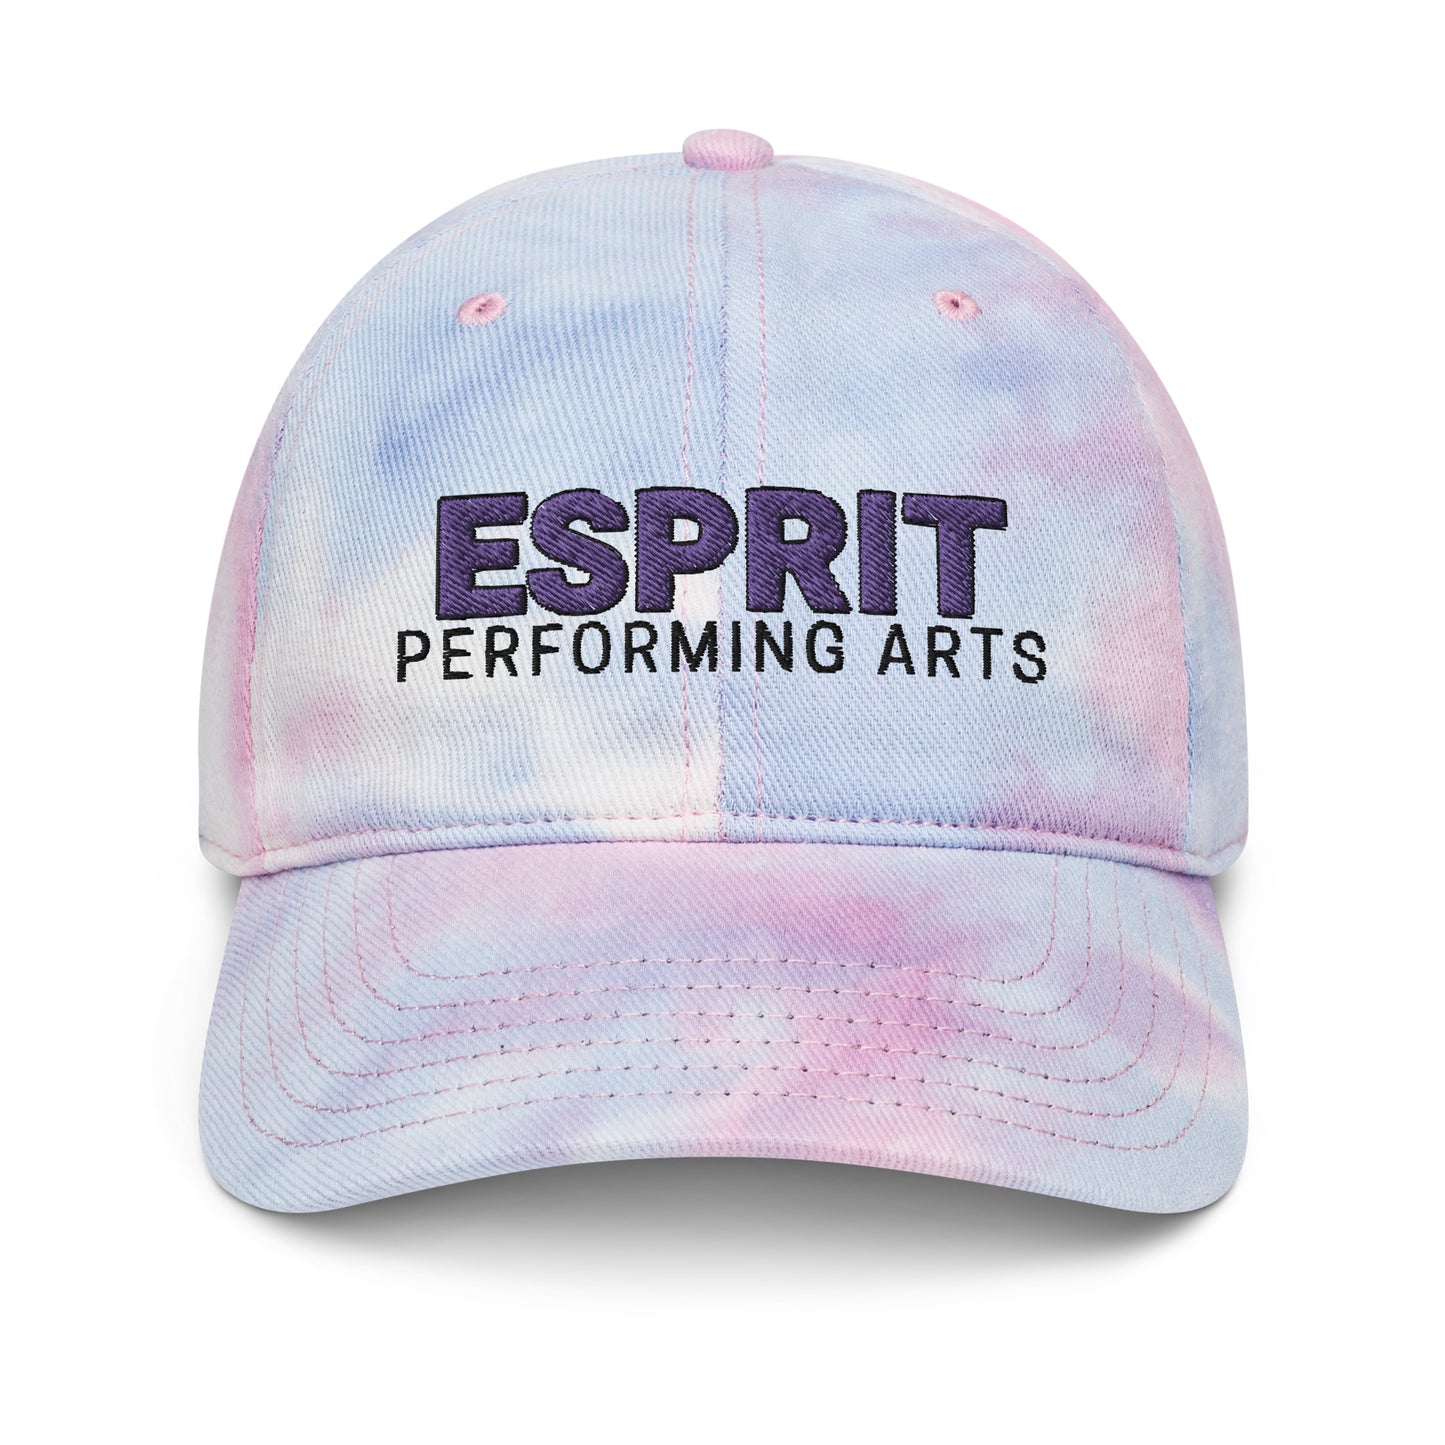 Esprit Performing Arts Hat - Adult Cotton Candy Tie Dye